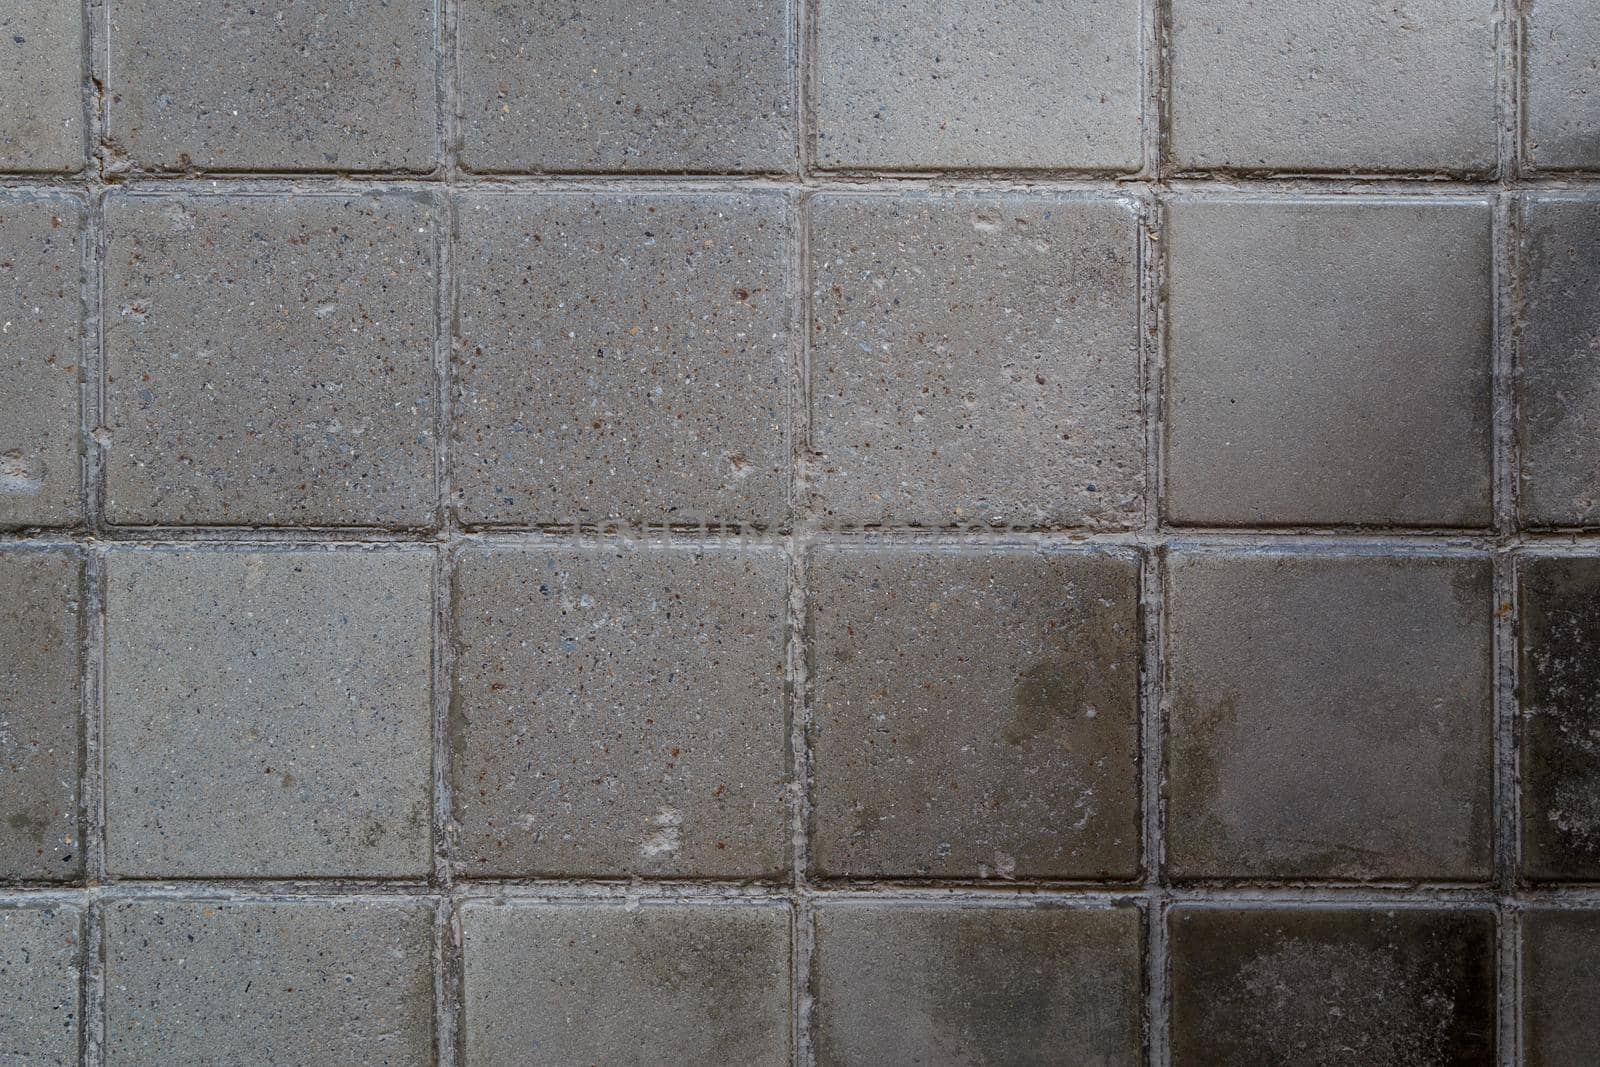 old soviet gray concrete tiled floor texture and full frame background.